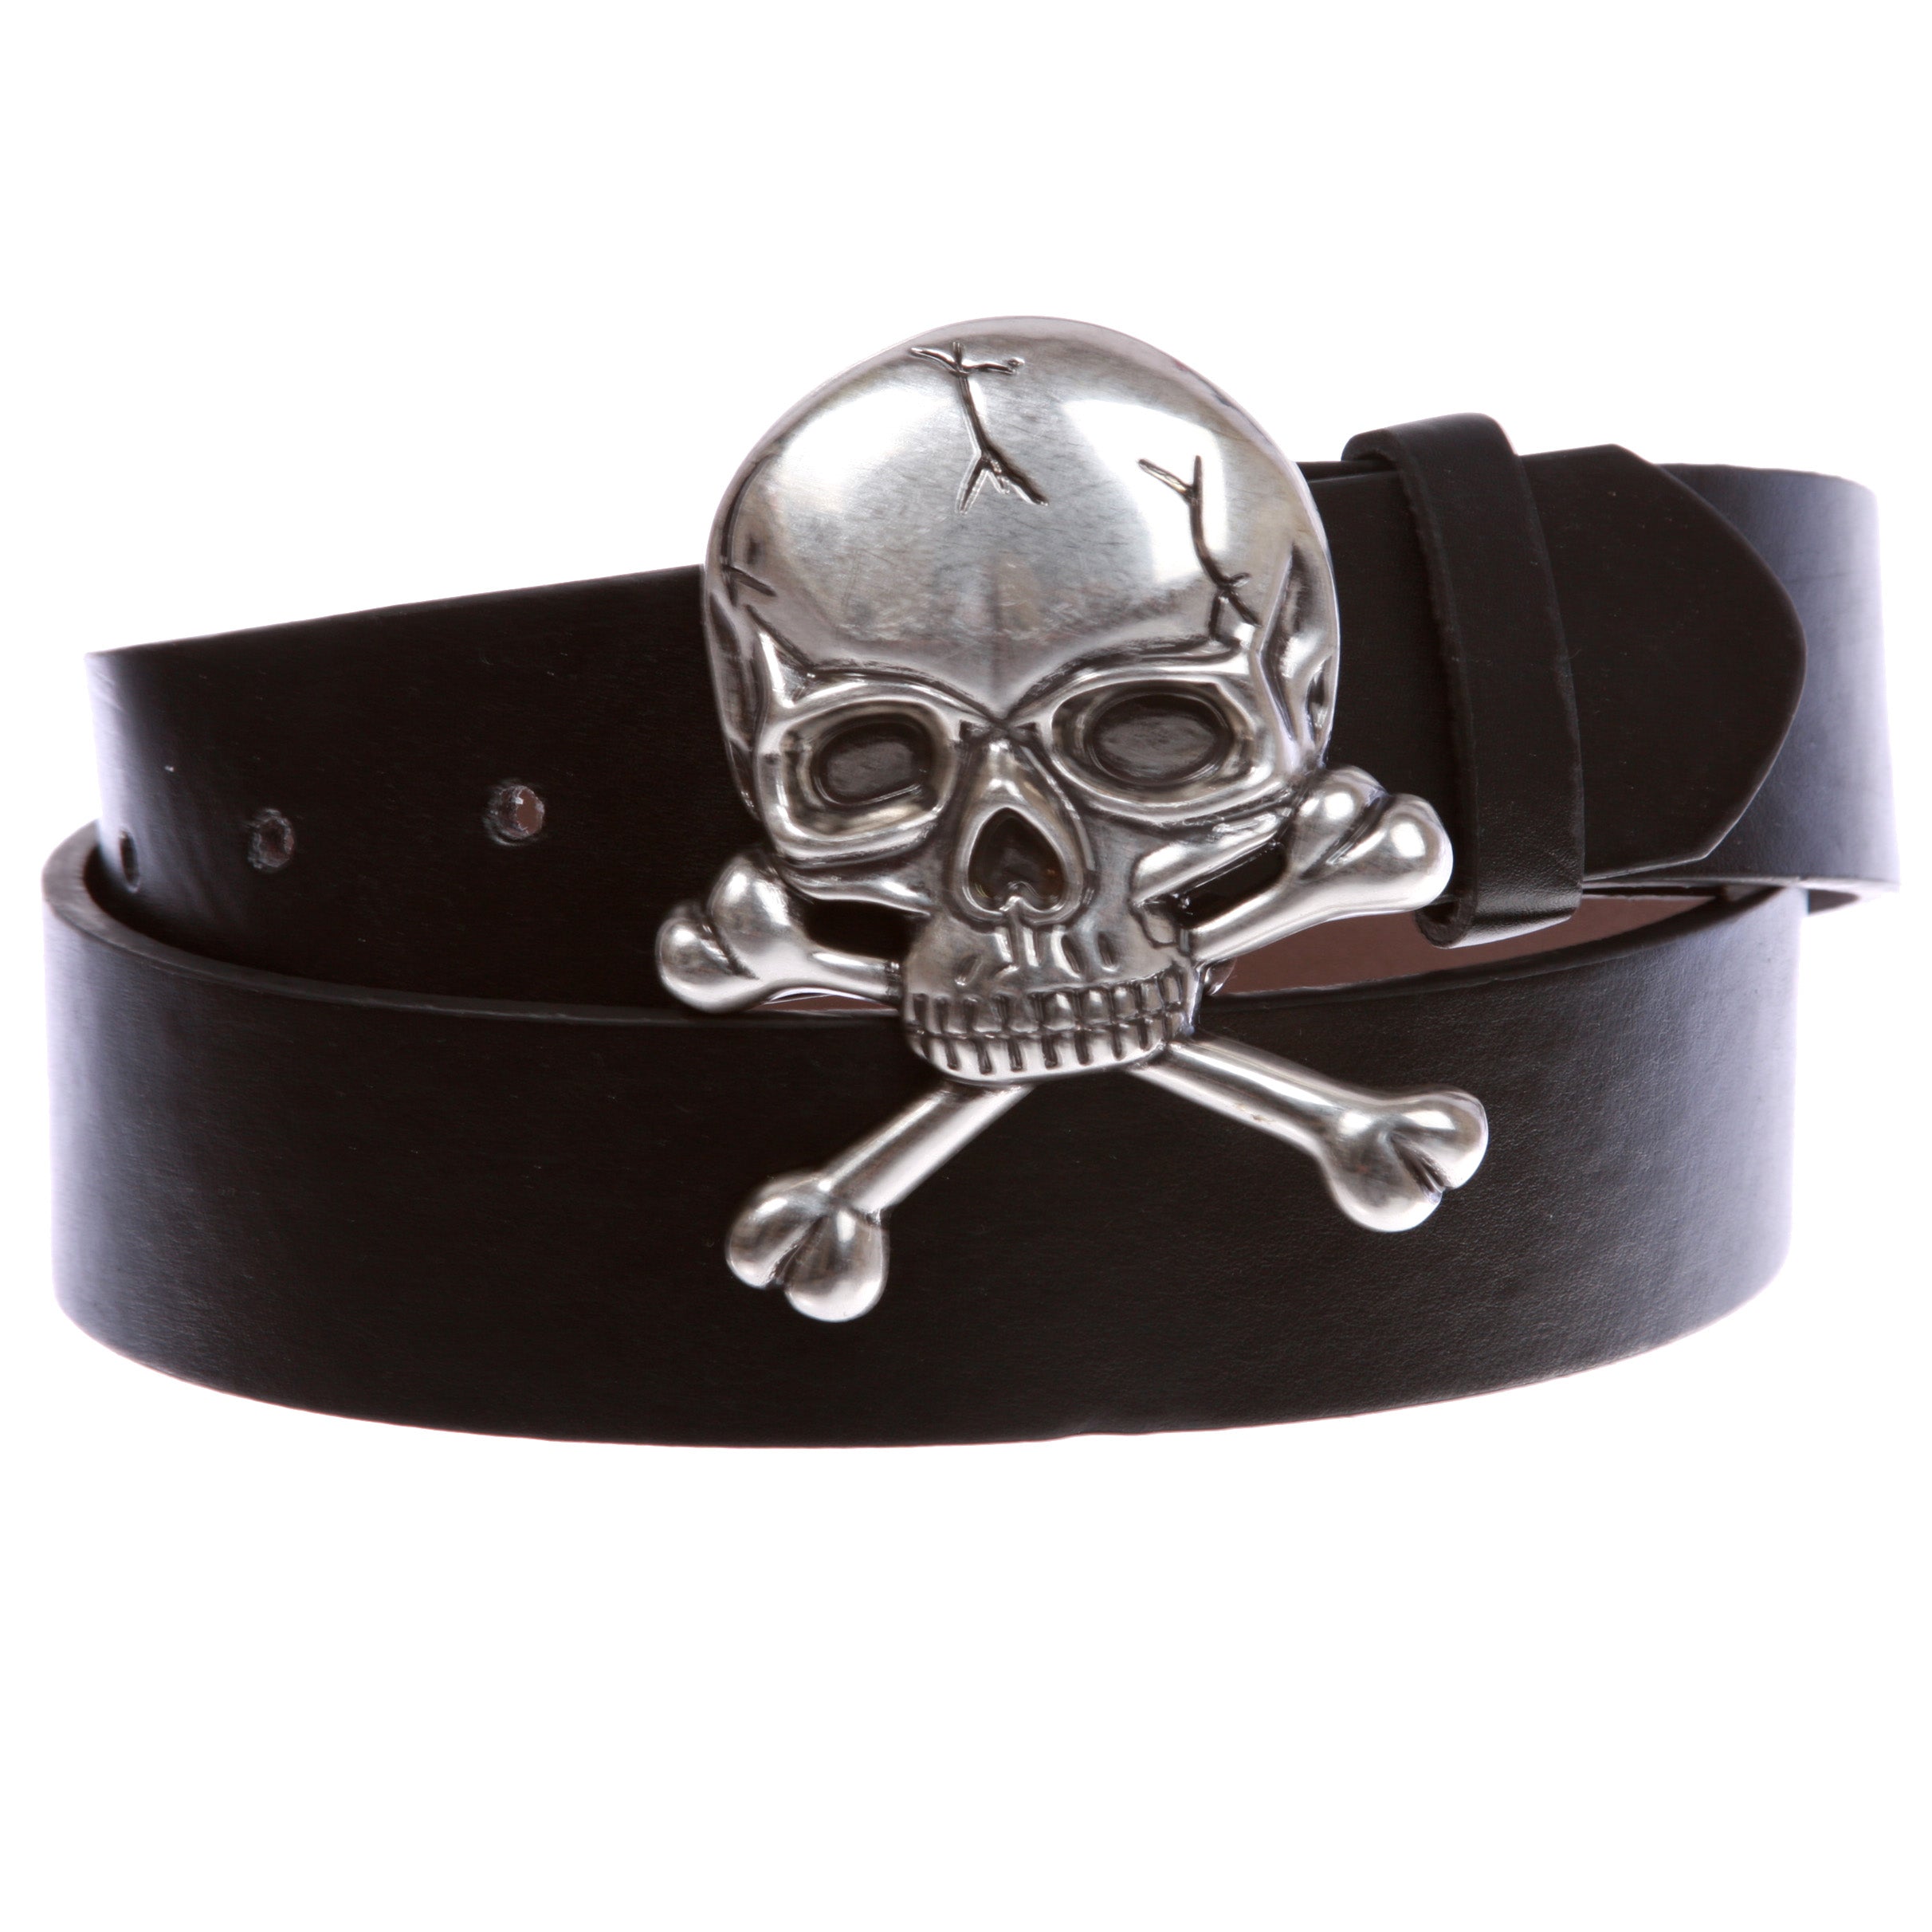 Skull and Cross Bone Pirate Halloween Costume Belt Multi-Color Options